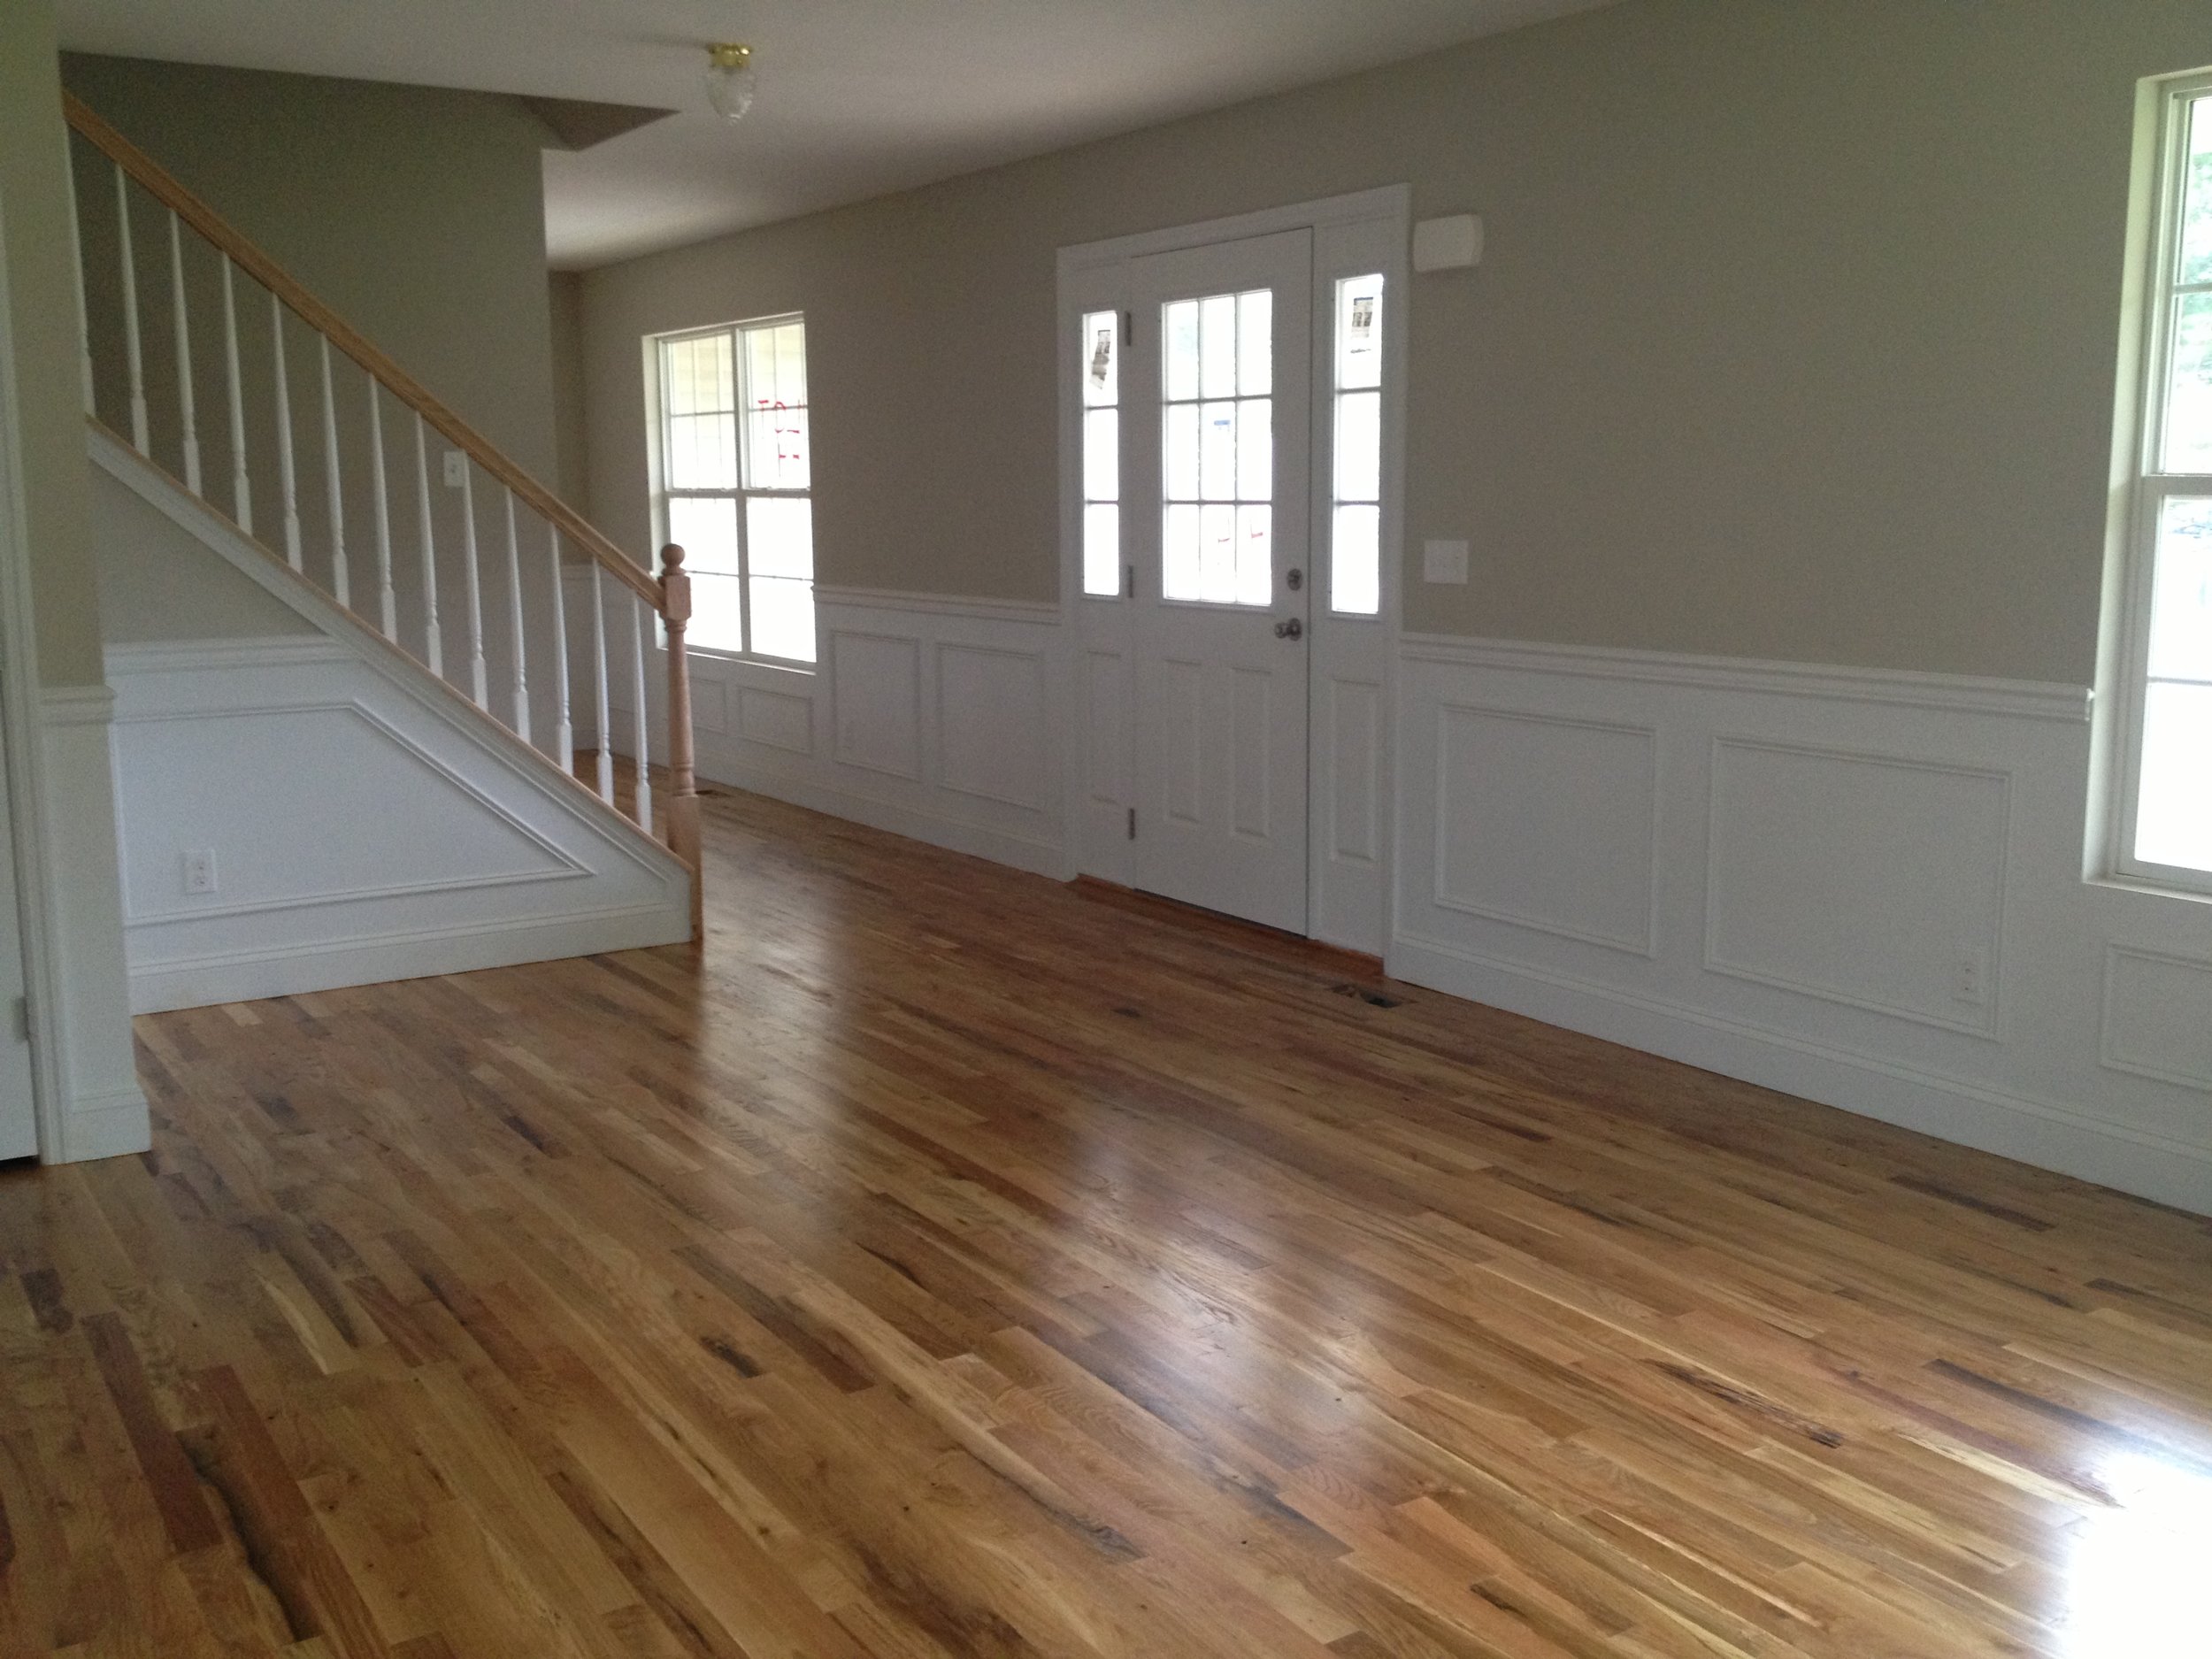 Diffe Grades Of Hardwood Flooring, Natural Color Hardwood Floors